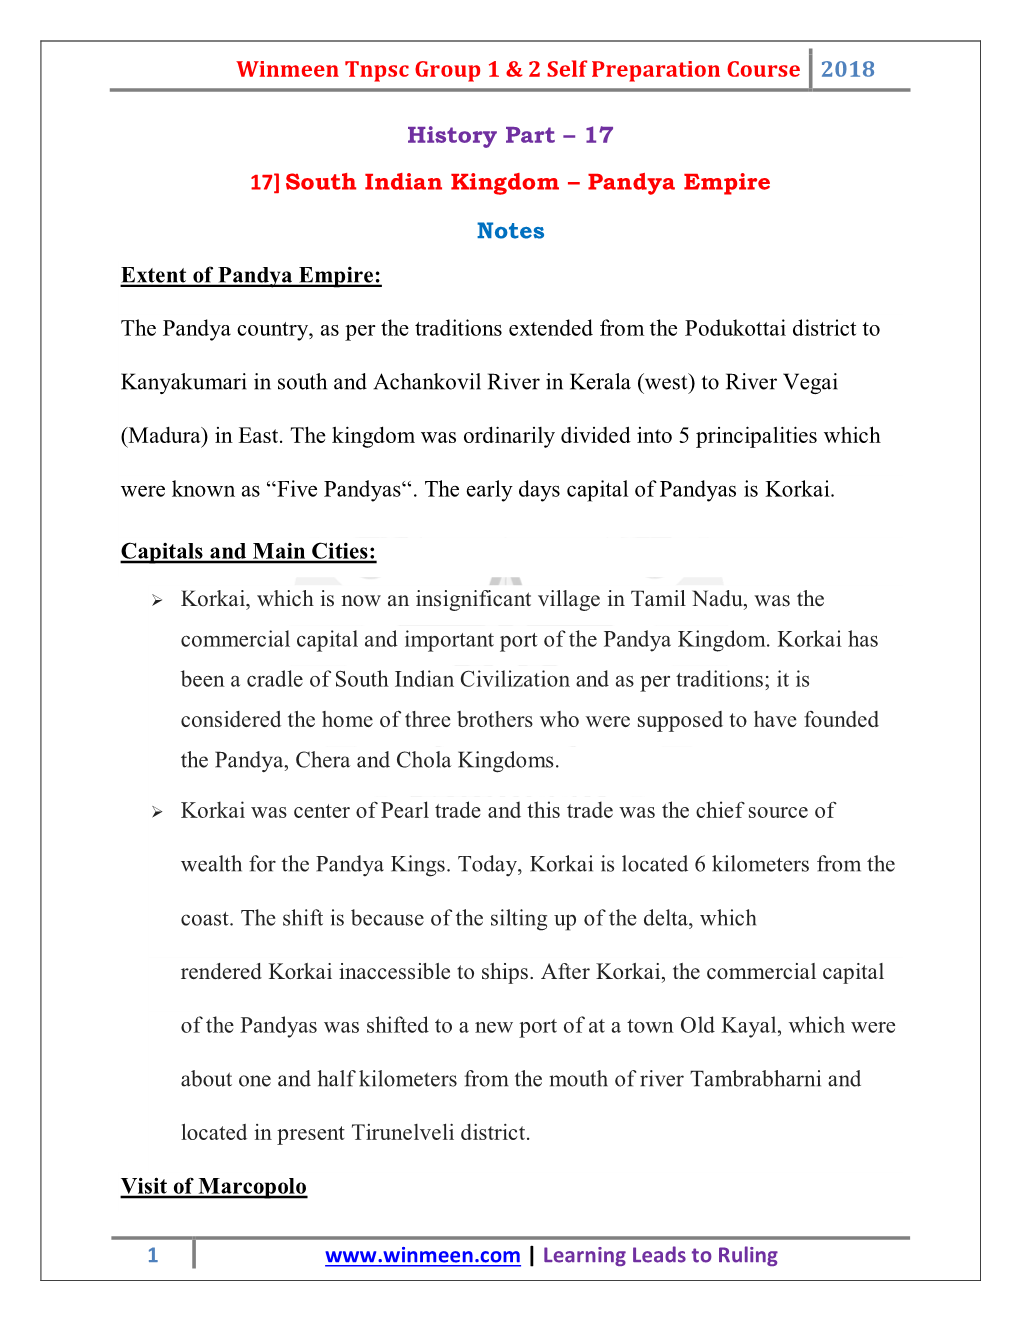 Pandya Empire